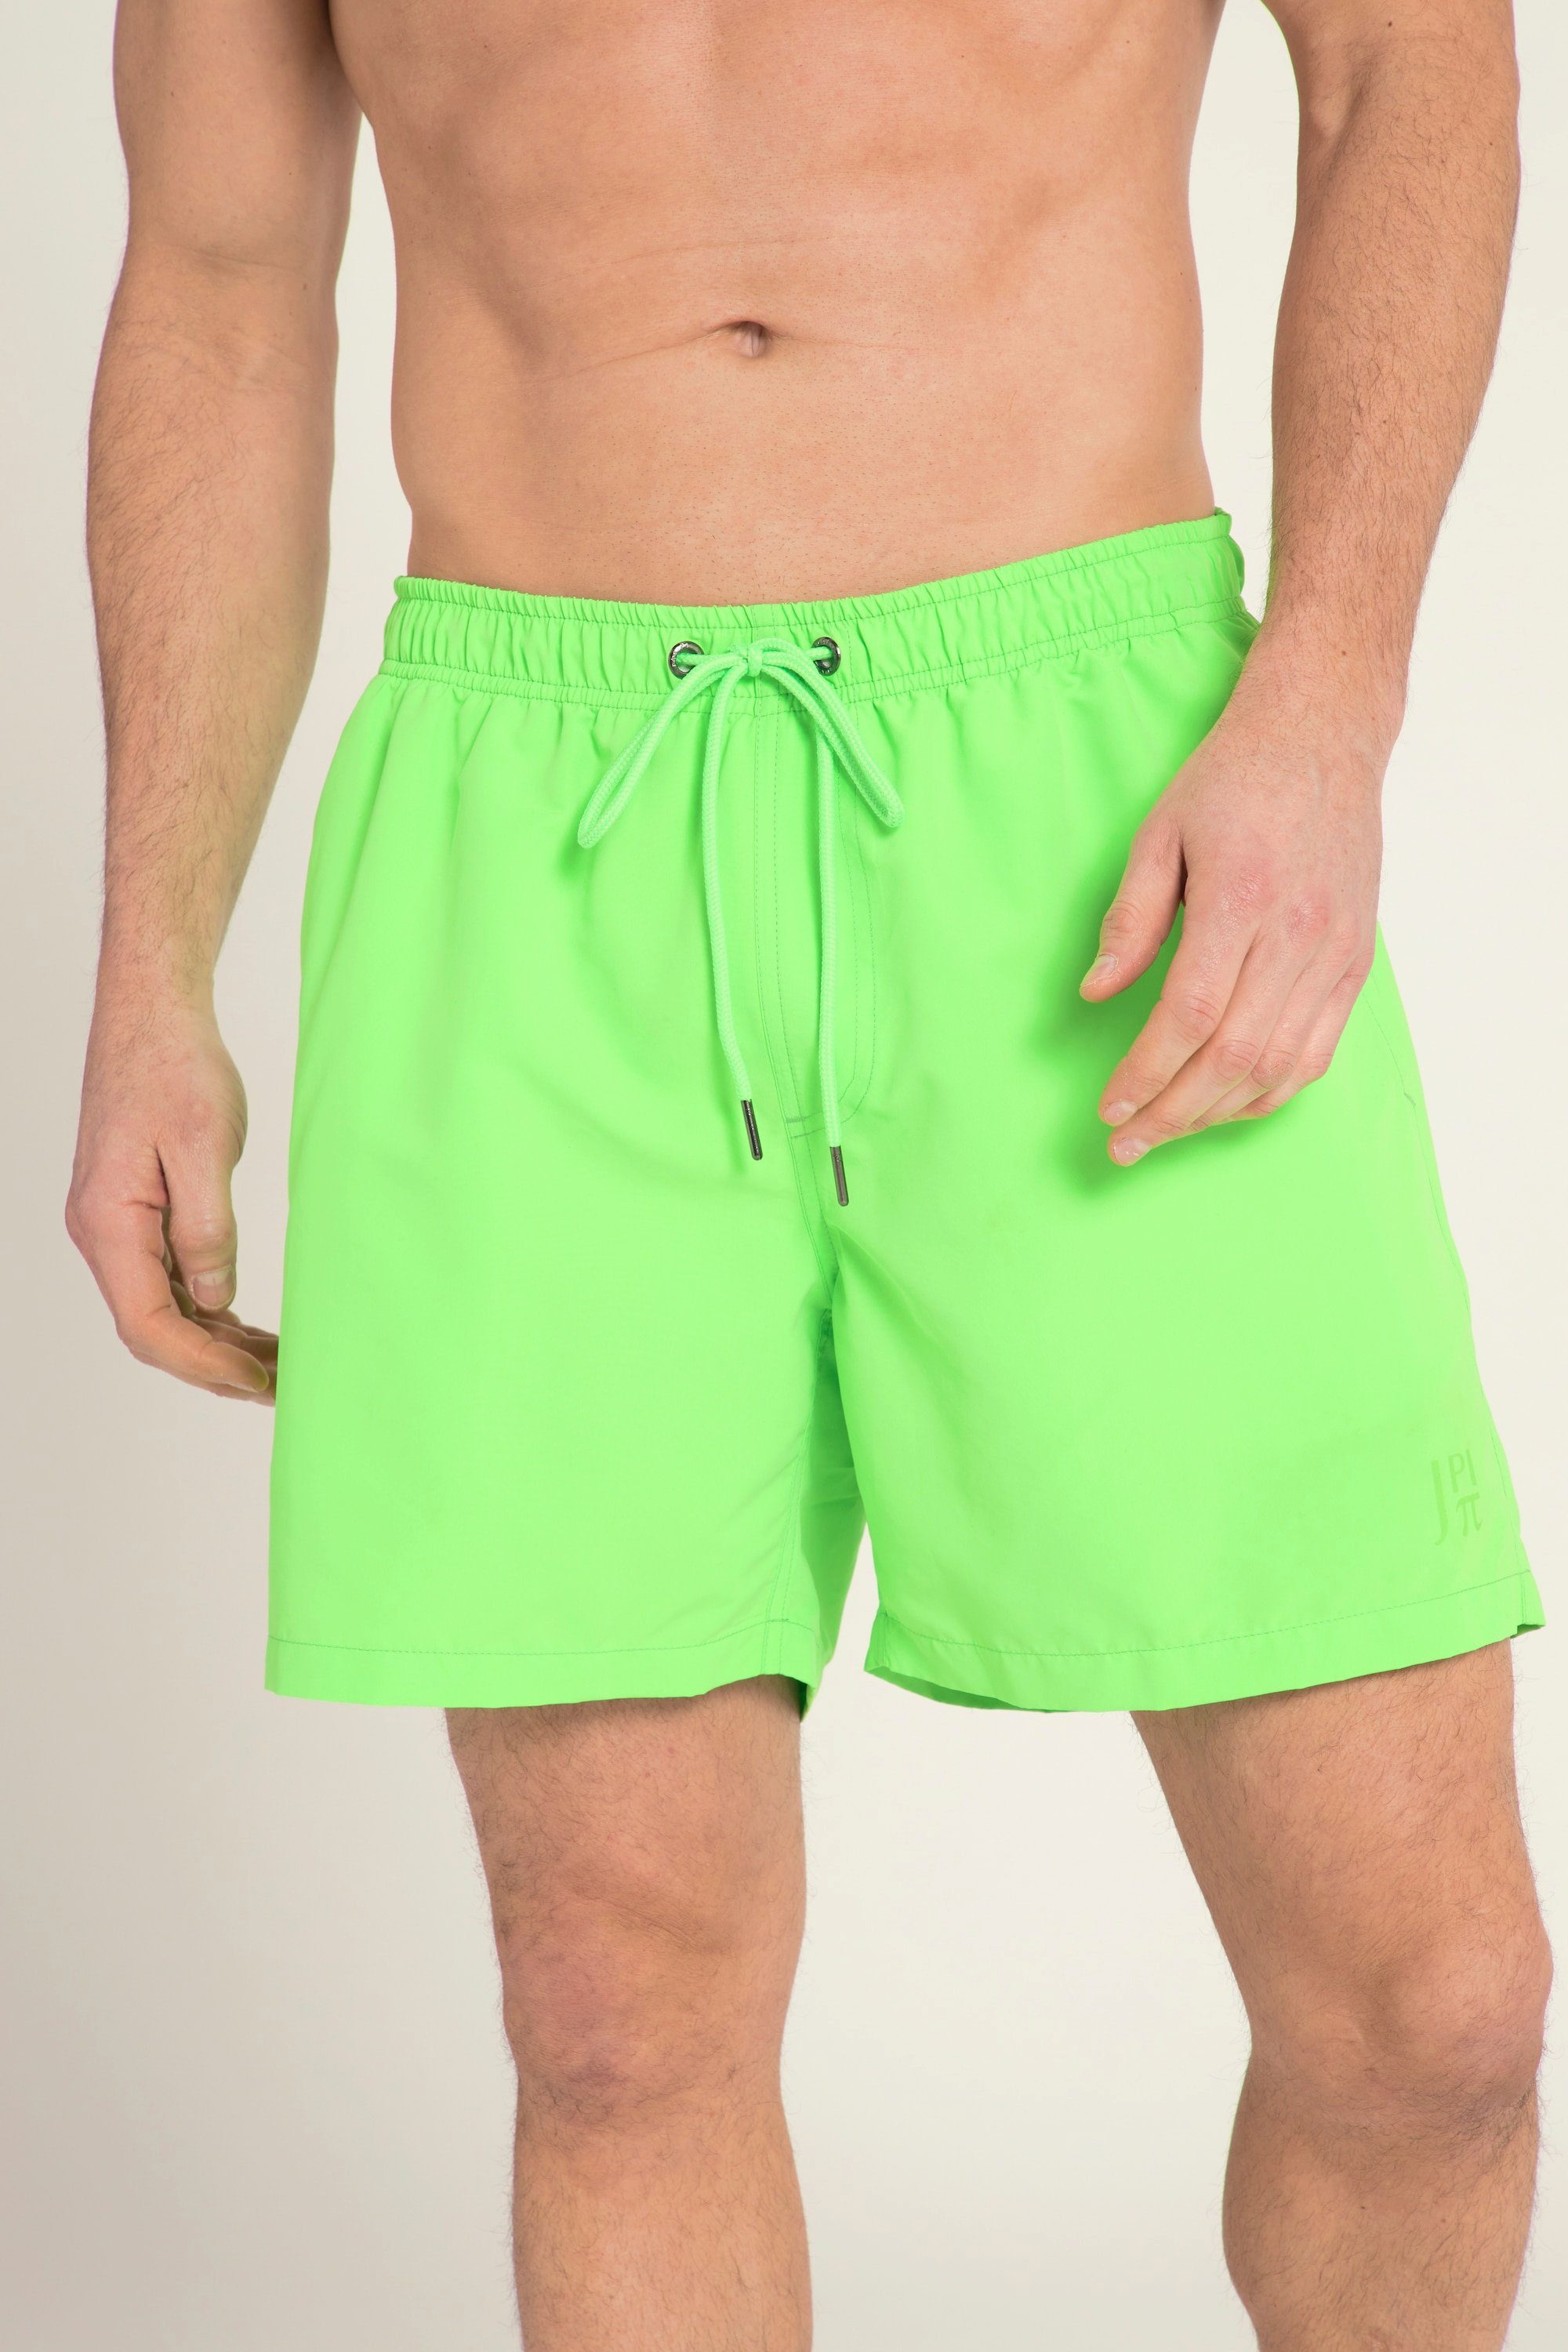 JP1880 Badehose Badeshorts Beachwear Zipptasche Elastikbund grün